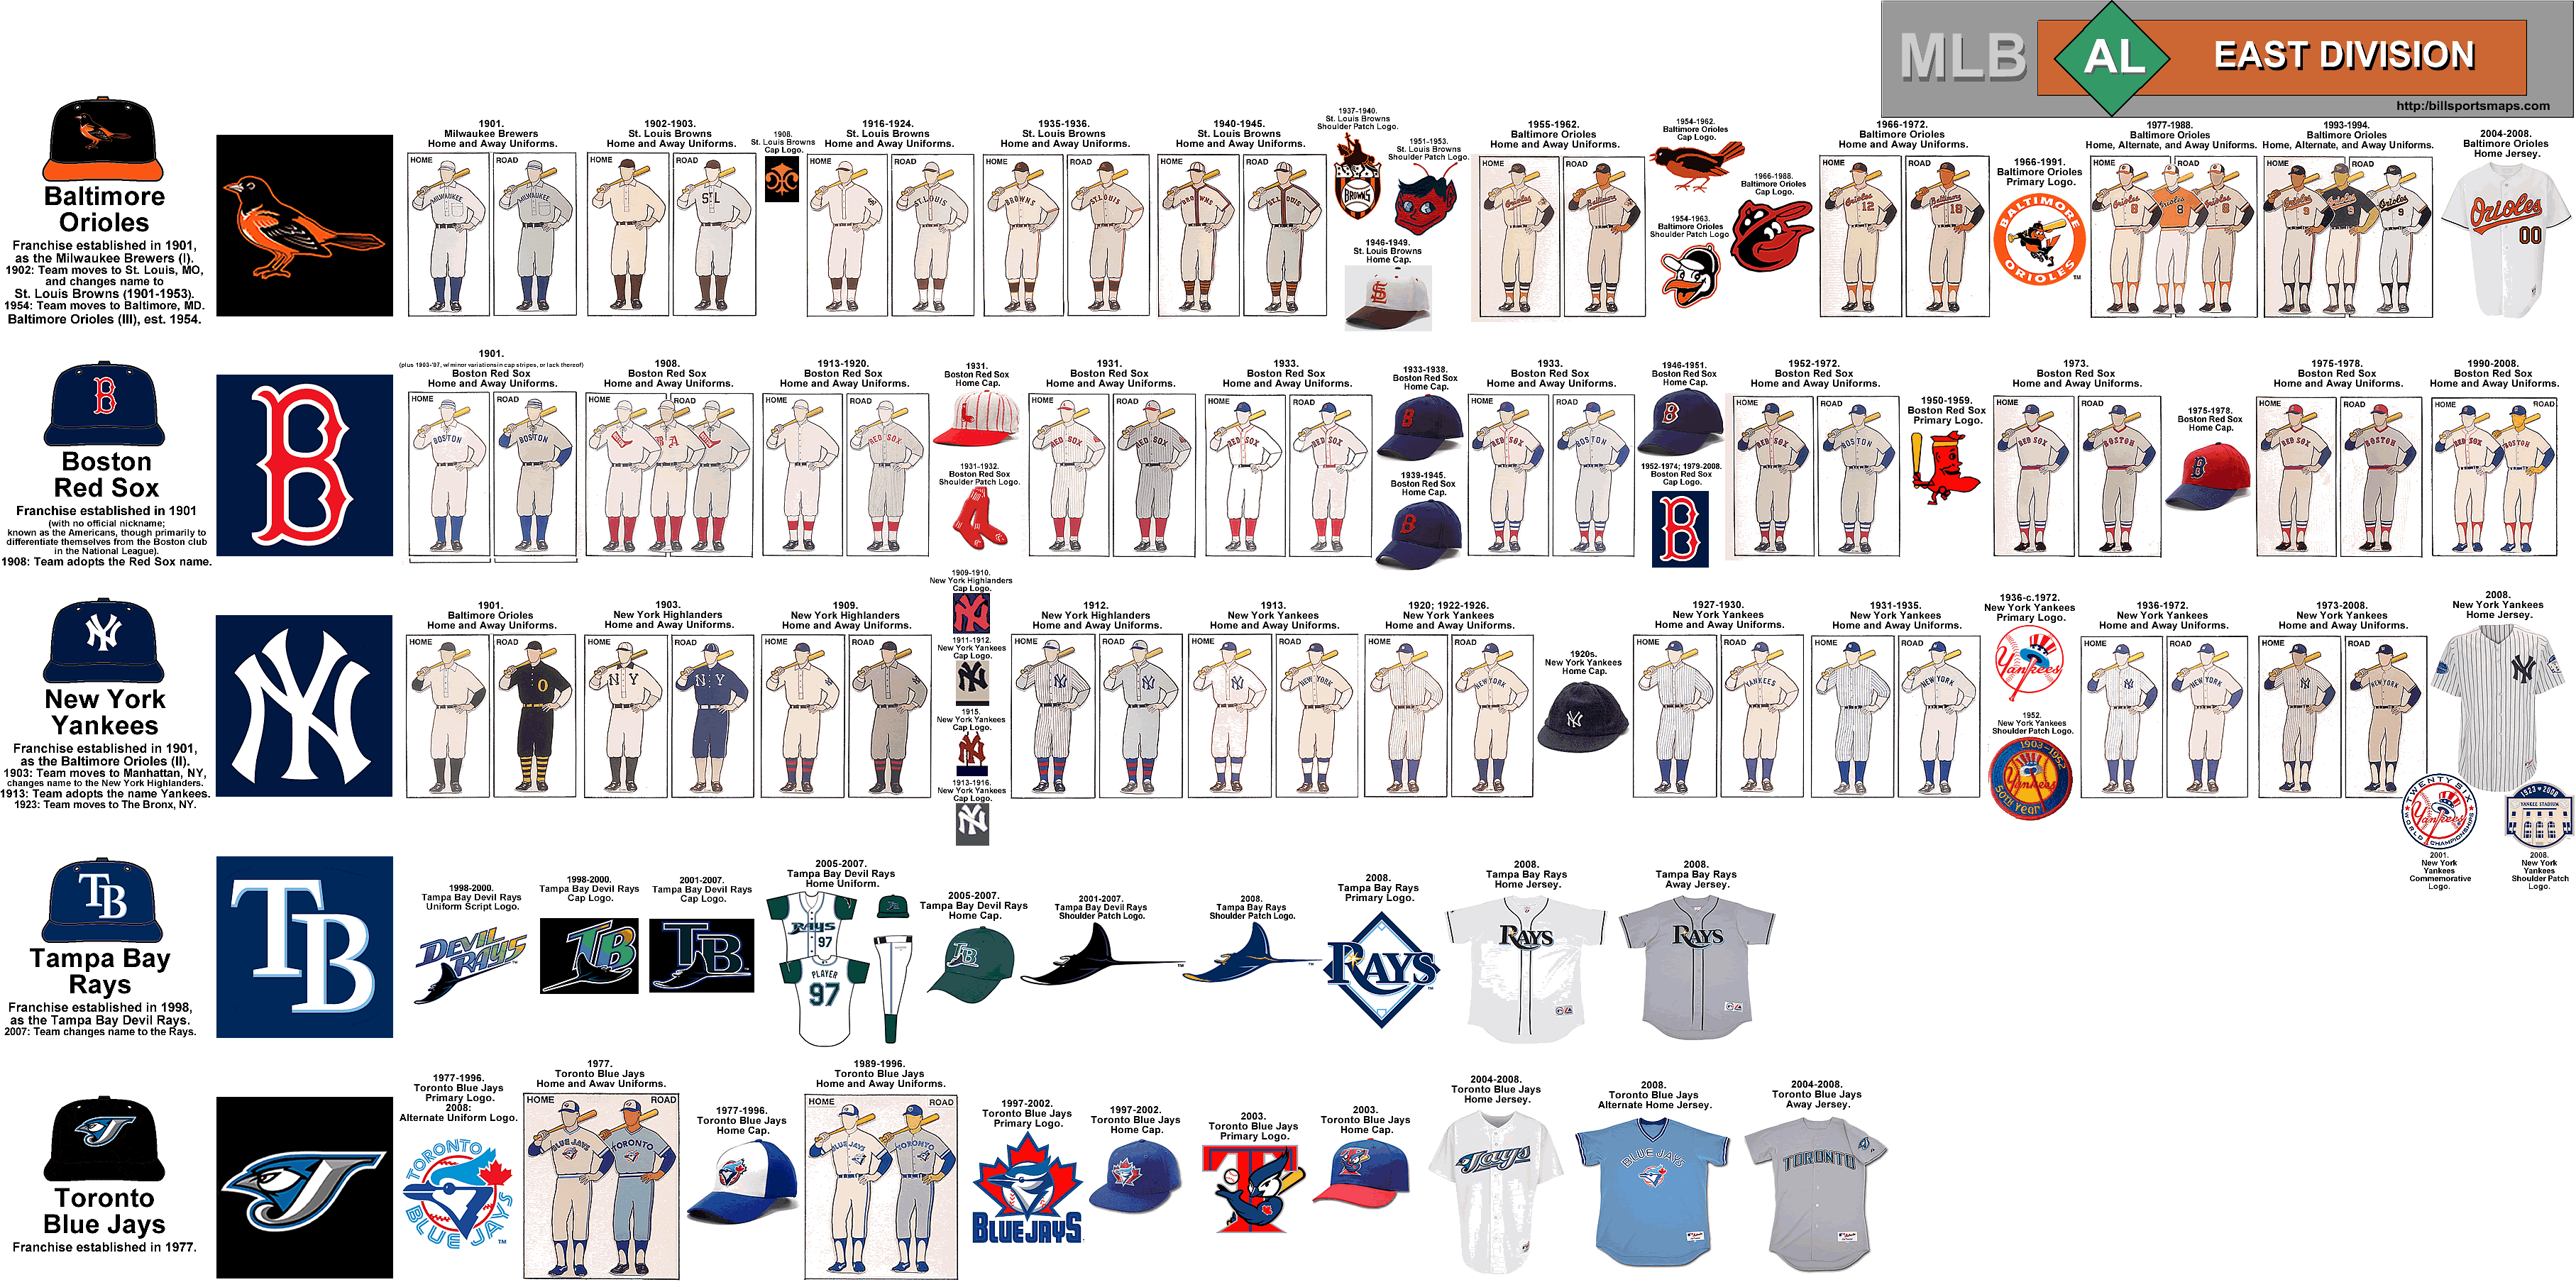 Colorado Rockies Alternate Uniform - National League (NL) - Chris Creamer's  Sports Logos Page 